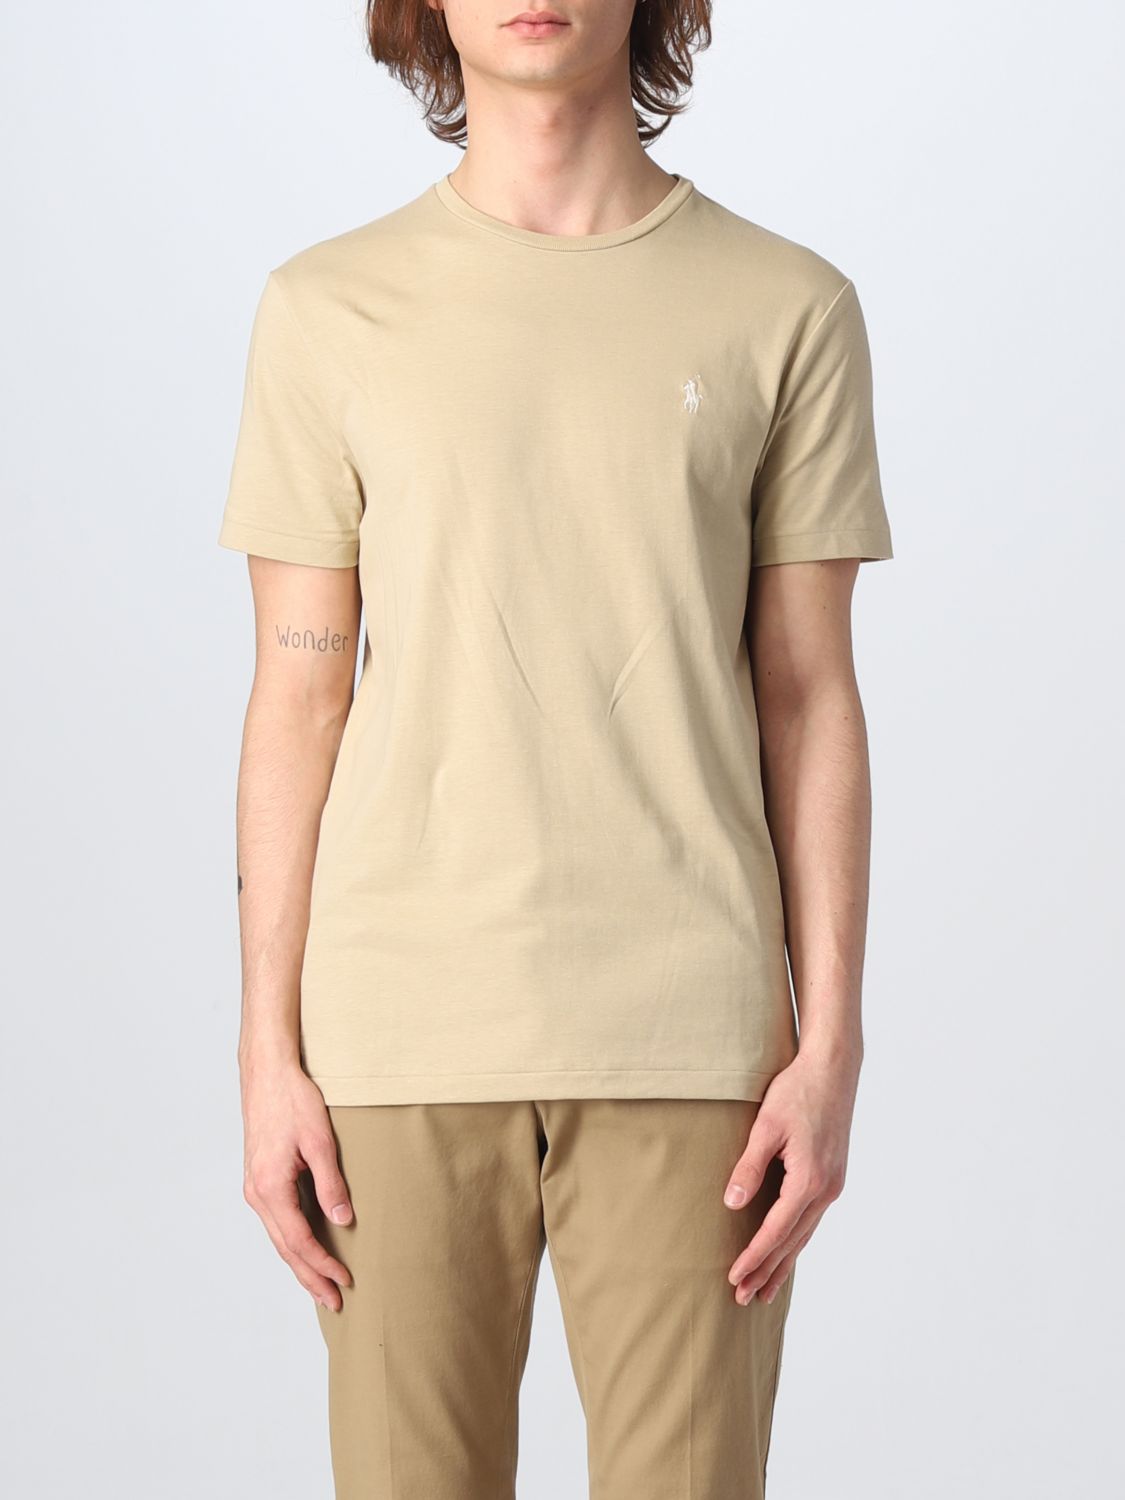 POLO RALPH LAUREN: t-shirt for man - Beige | Polo Ralph Lauren t-shirt  710671438 online on 